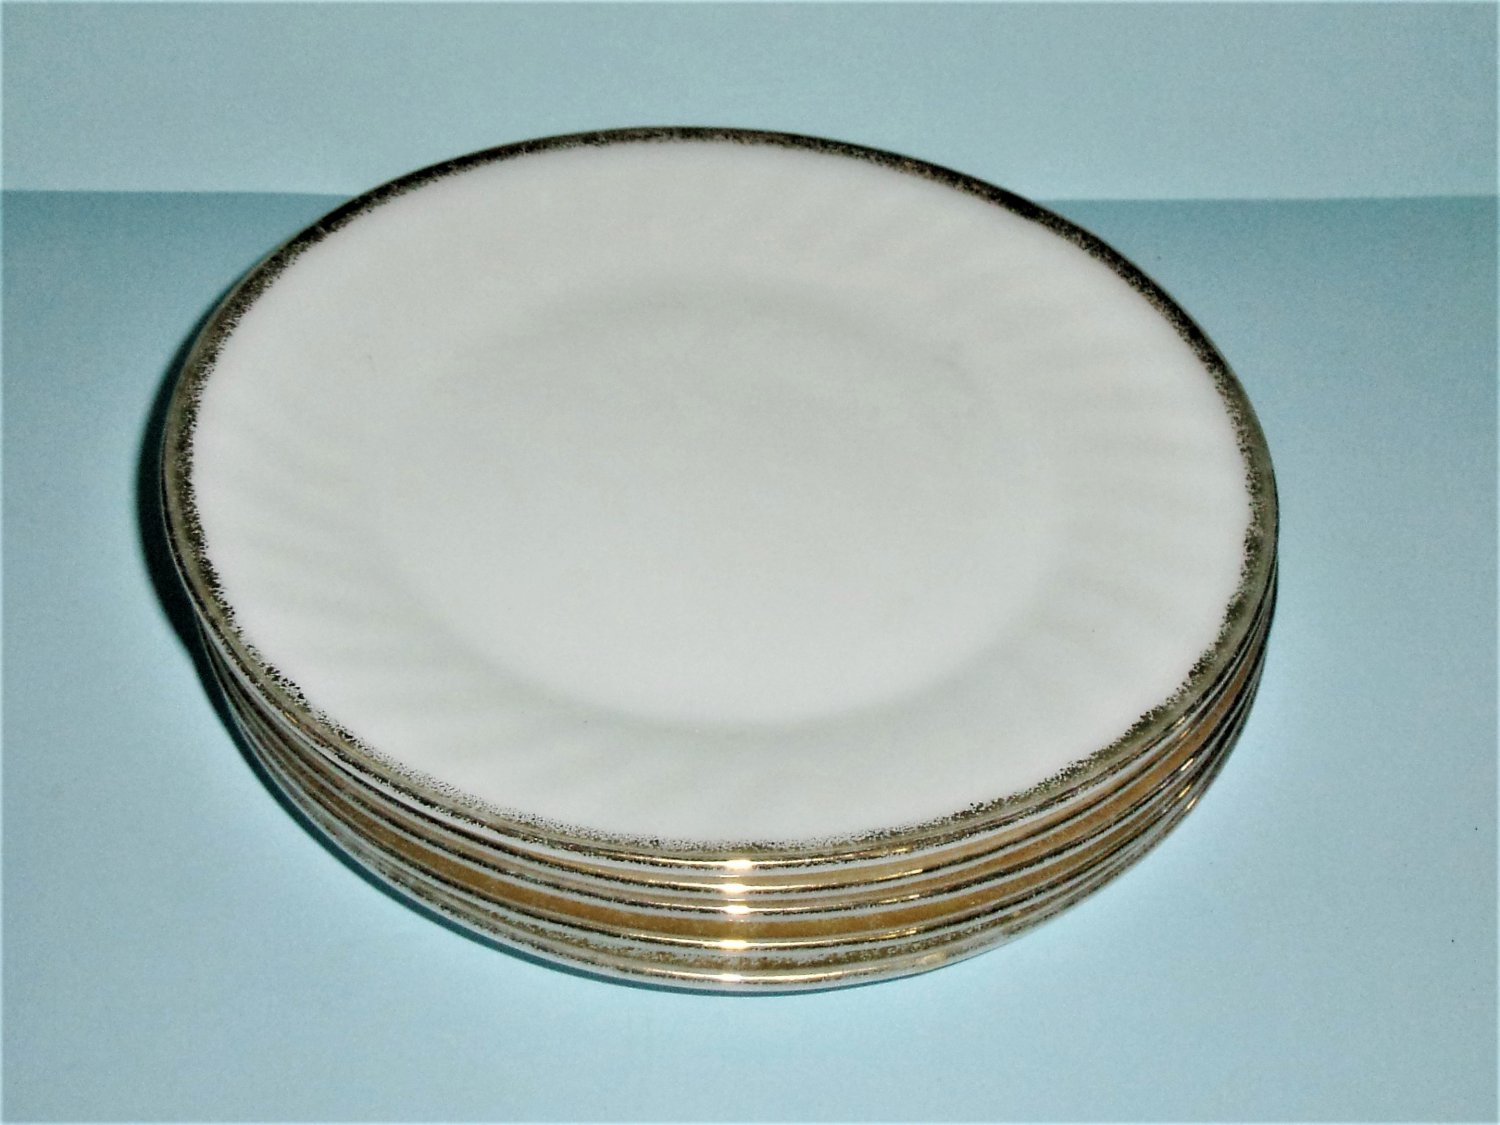 Fire King White Swirl Golden Anniversary Set of 5 Dinner Plates 9 Inches